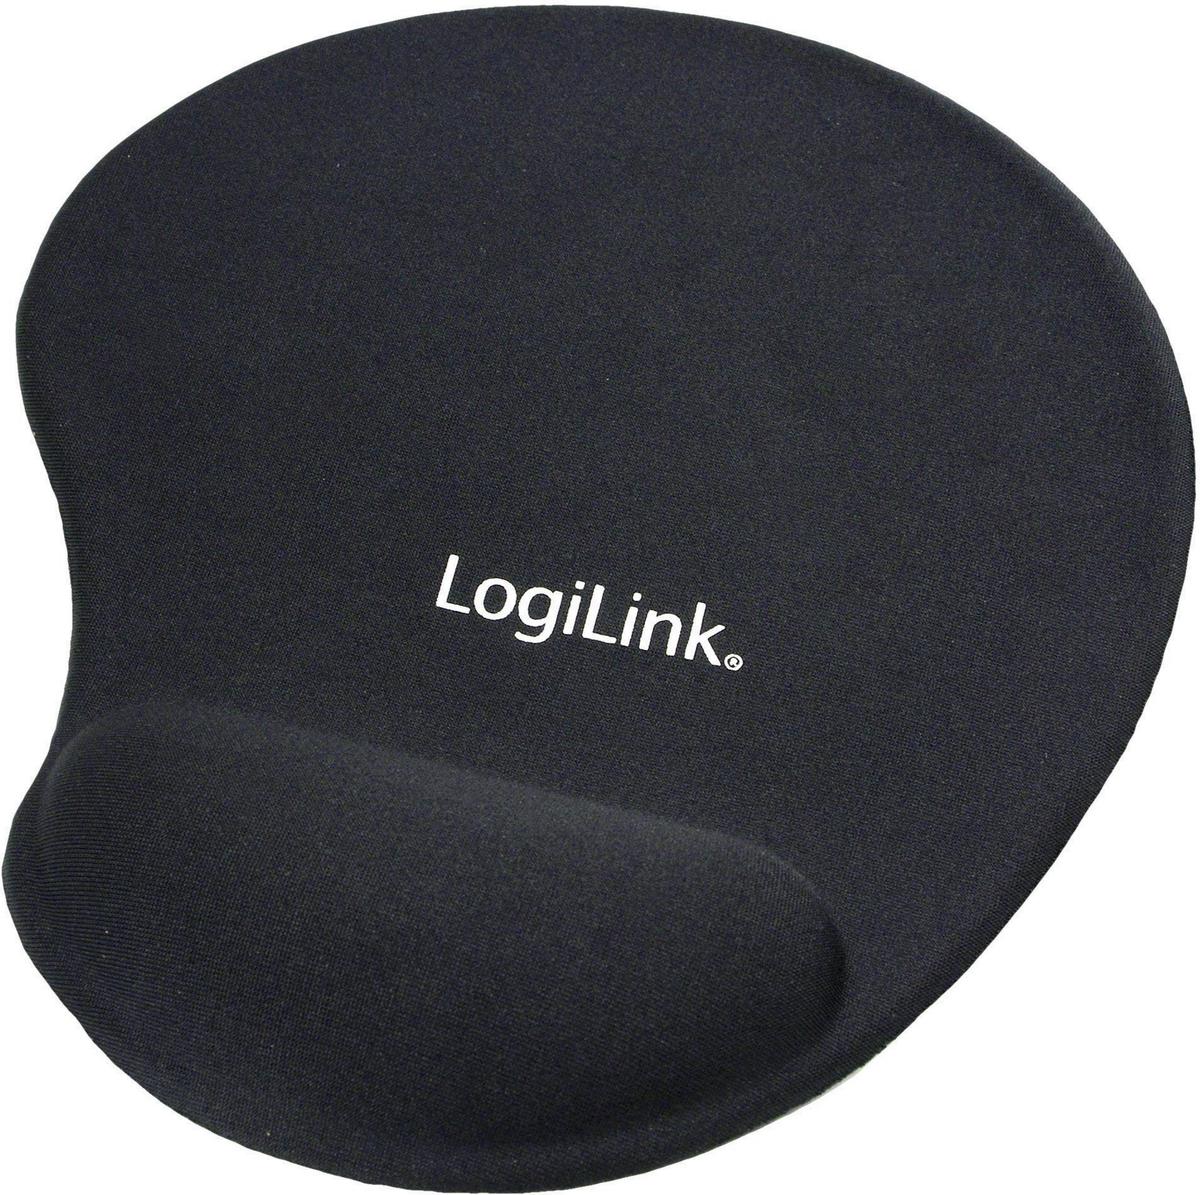 LogiLink mouse pad with wrist ergonomic rest